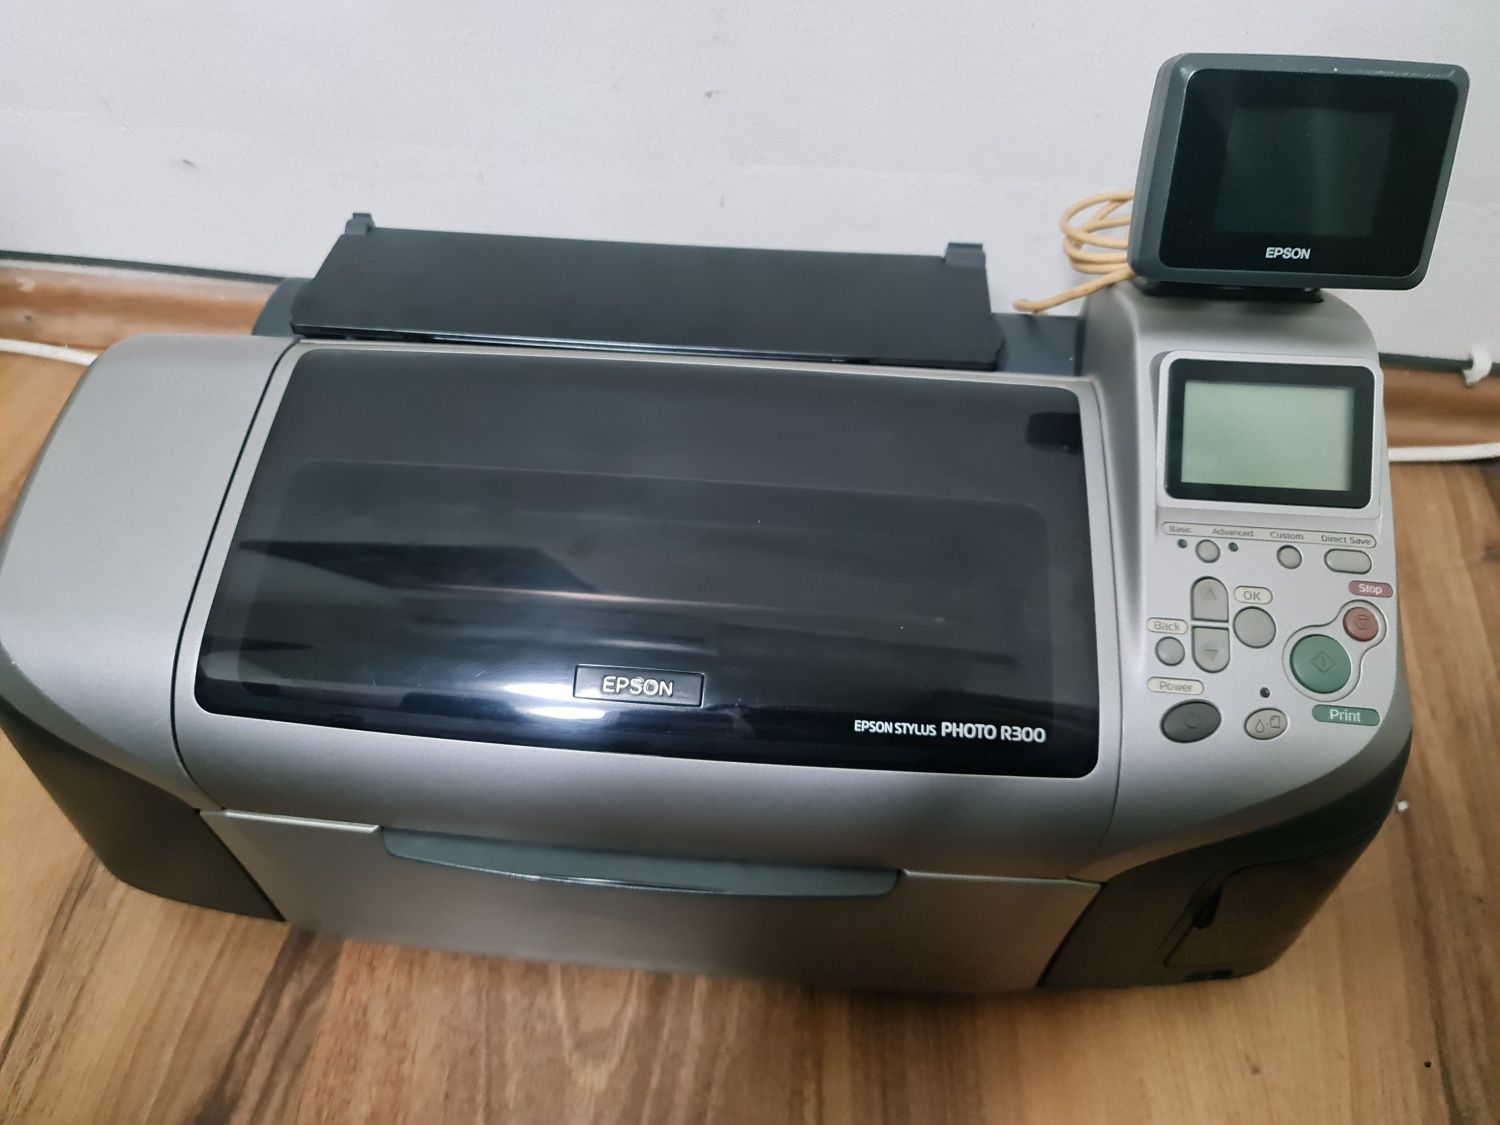 Imprimanta Epson photo r300